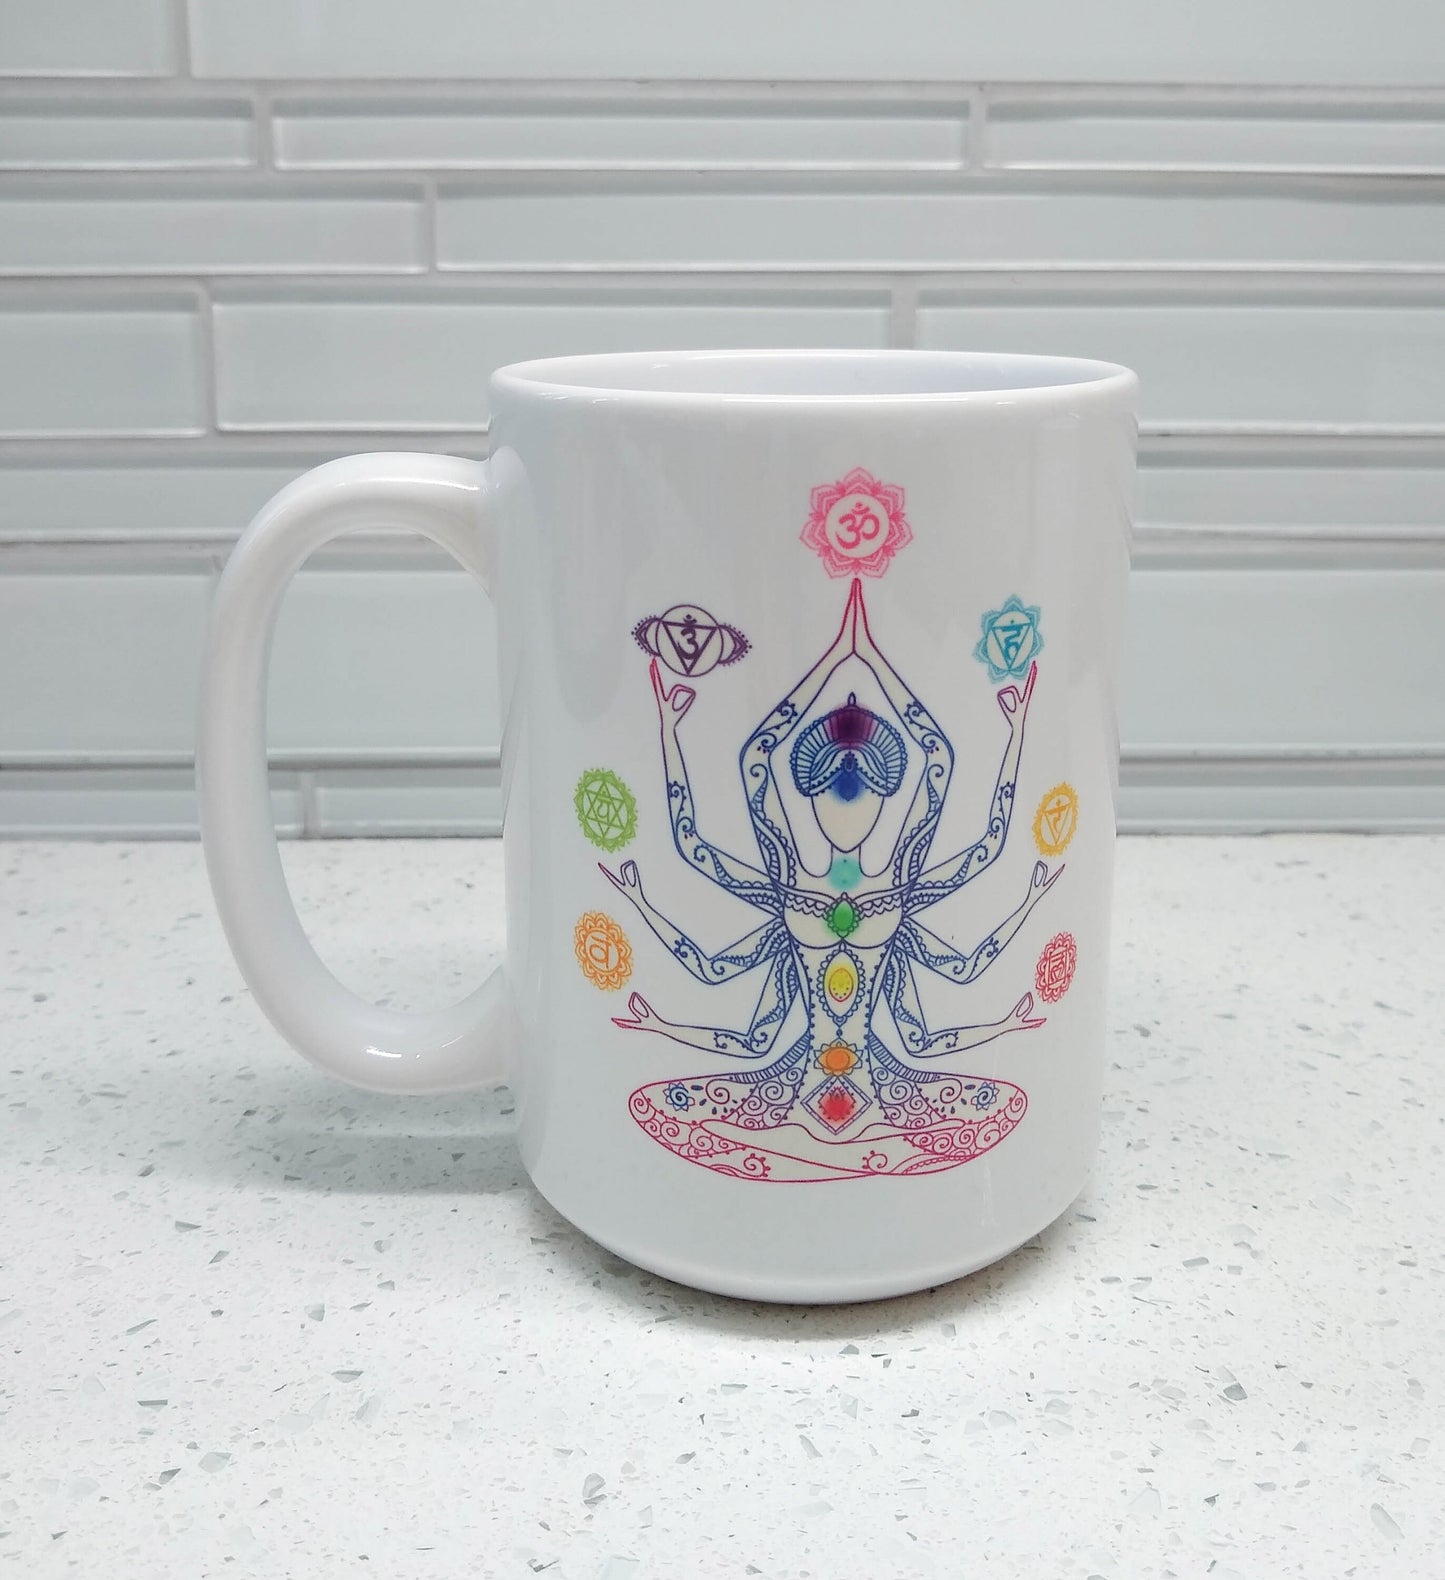 Chakra Mug chakras mug yoga mug spiritual mug meditation mug chakra mug girly mugs cute yoga mug rainbow mug chakra mugs cheap gifts